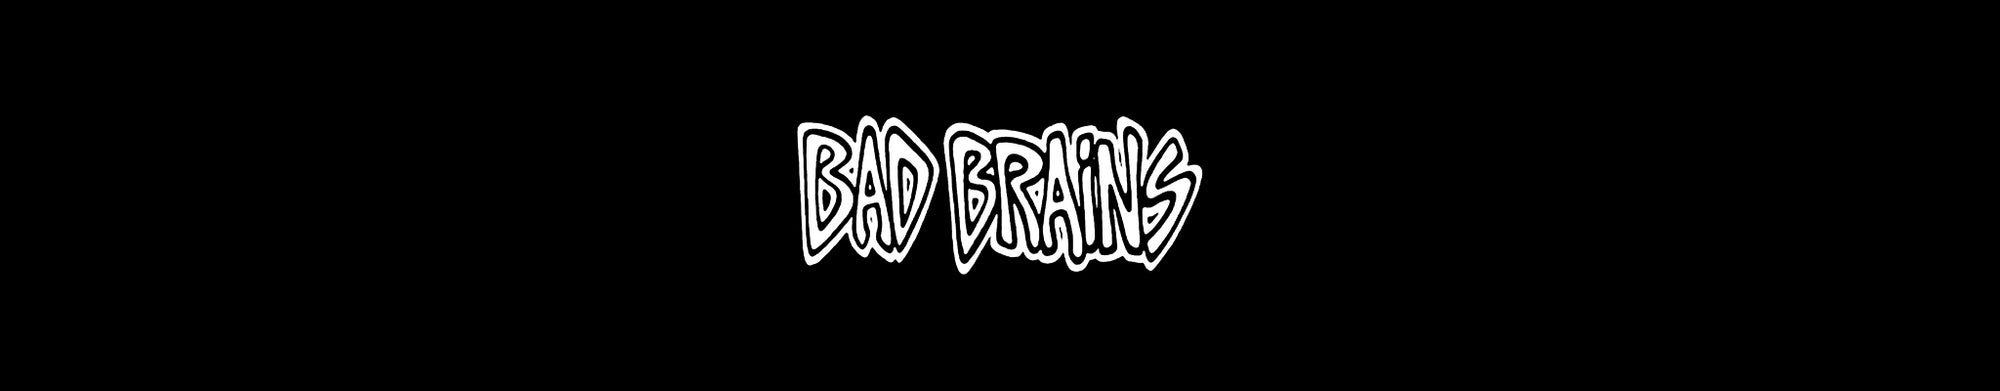 Bad Brains T Shirt -  Singapore